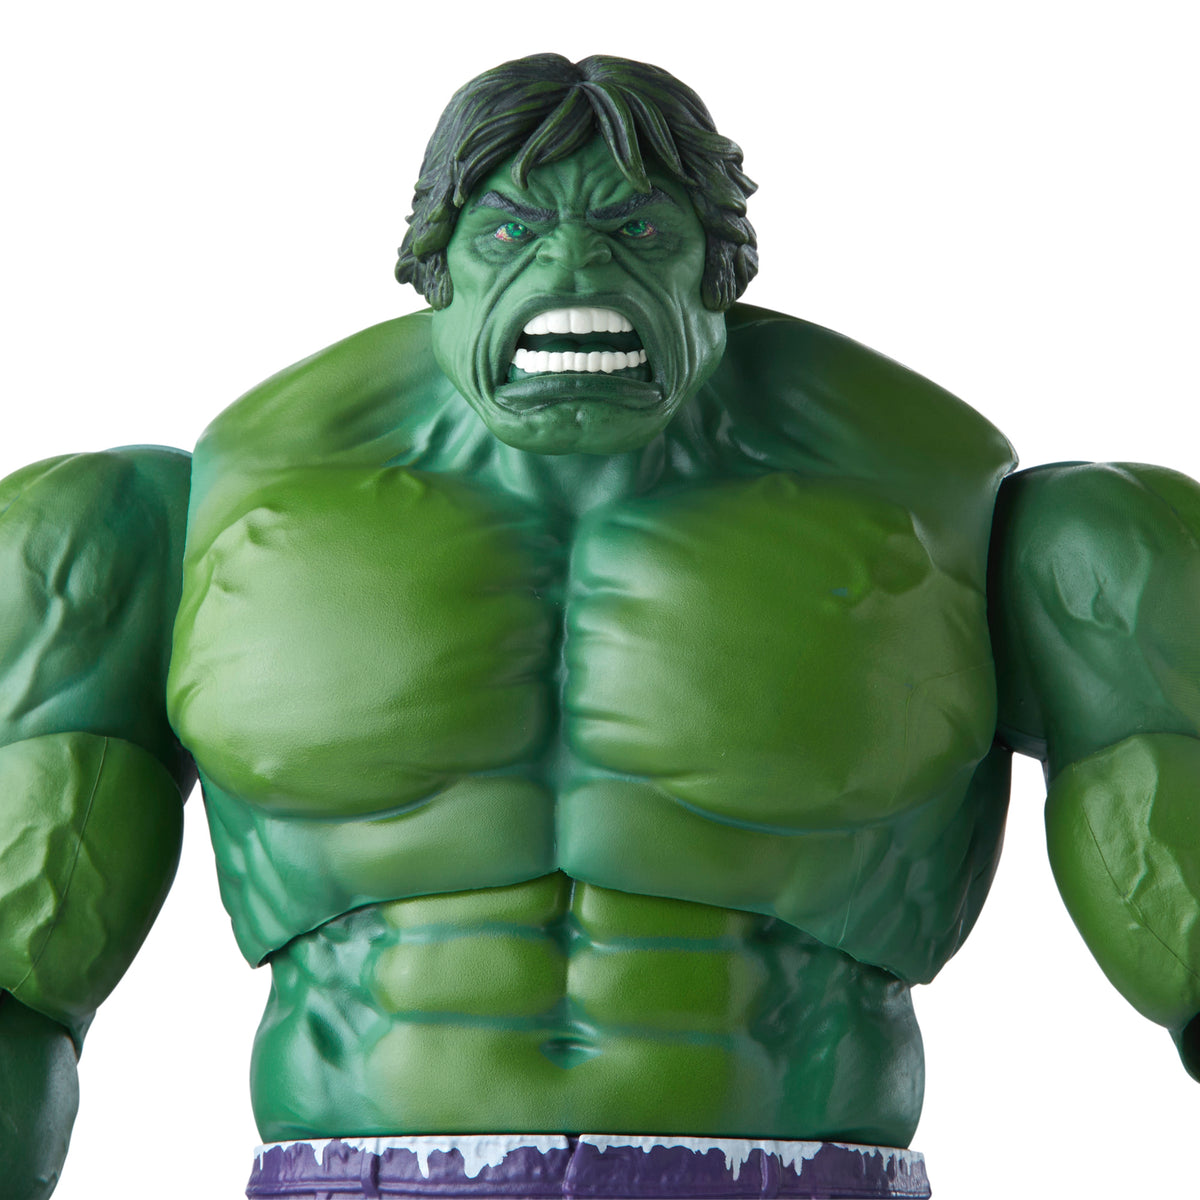 Hulk figurine Marvel Legends 20th Anniversary Series 1 Hasbro 20 cm -  Kingdom Figurine